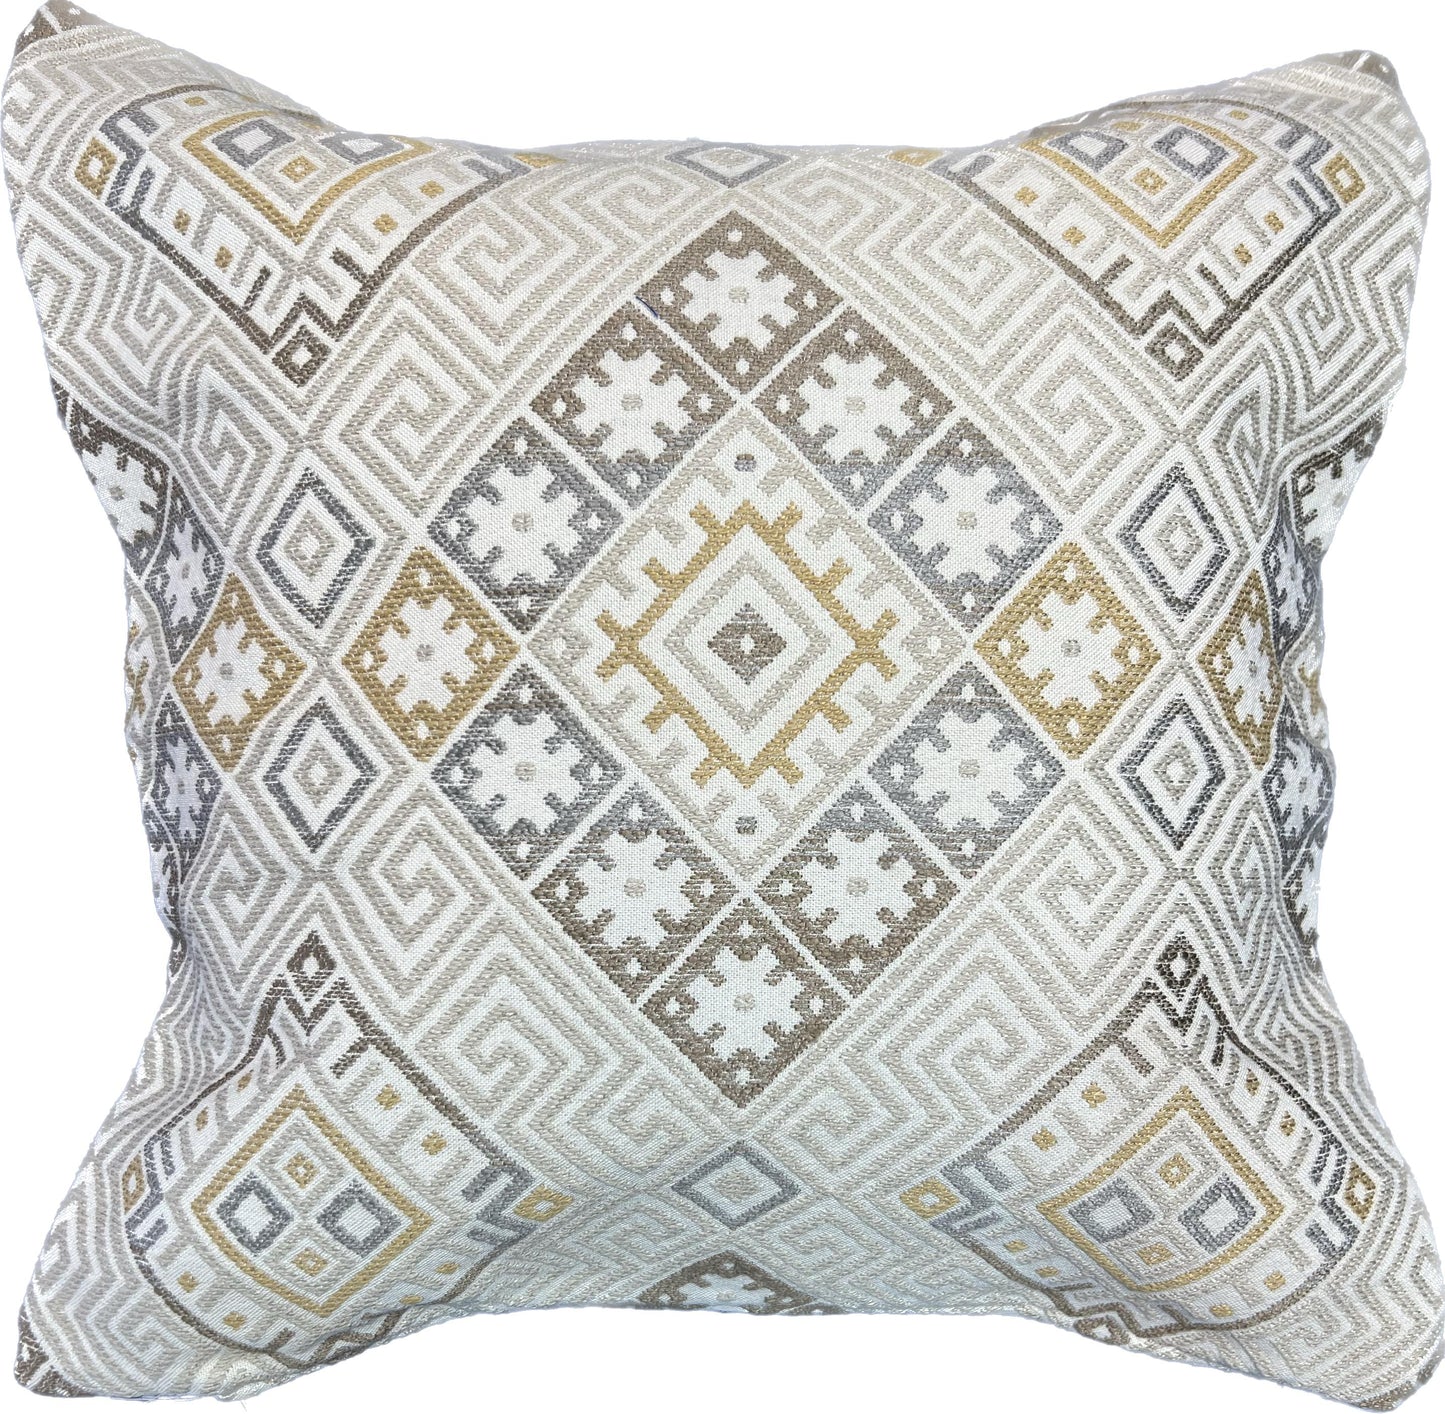 18"x18"  Geometric Pillow Cover